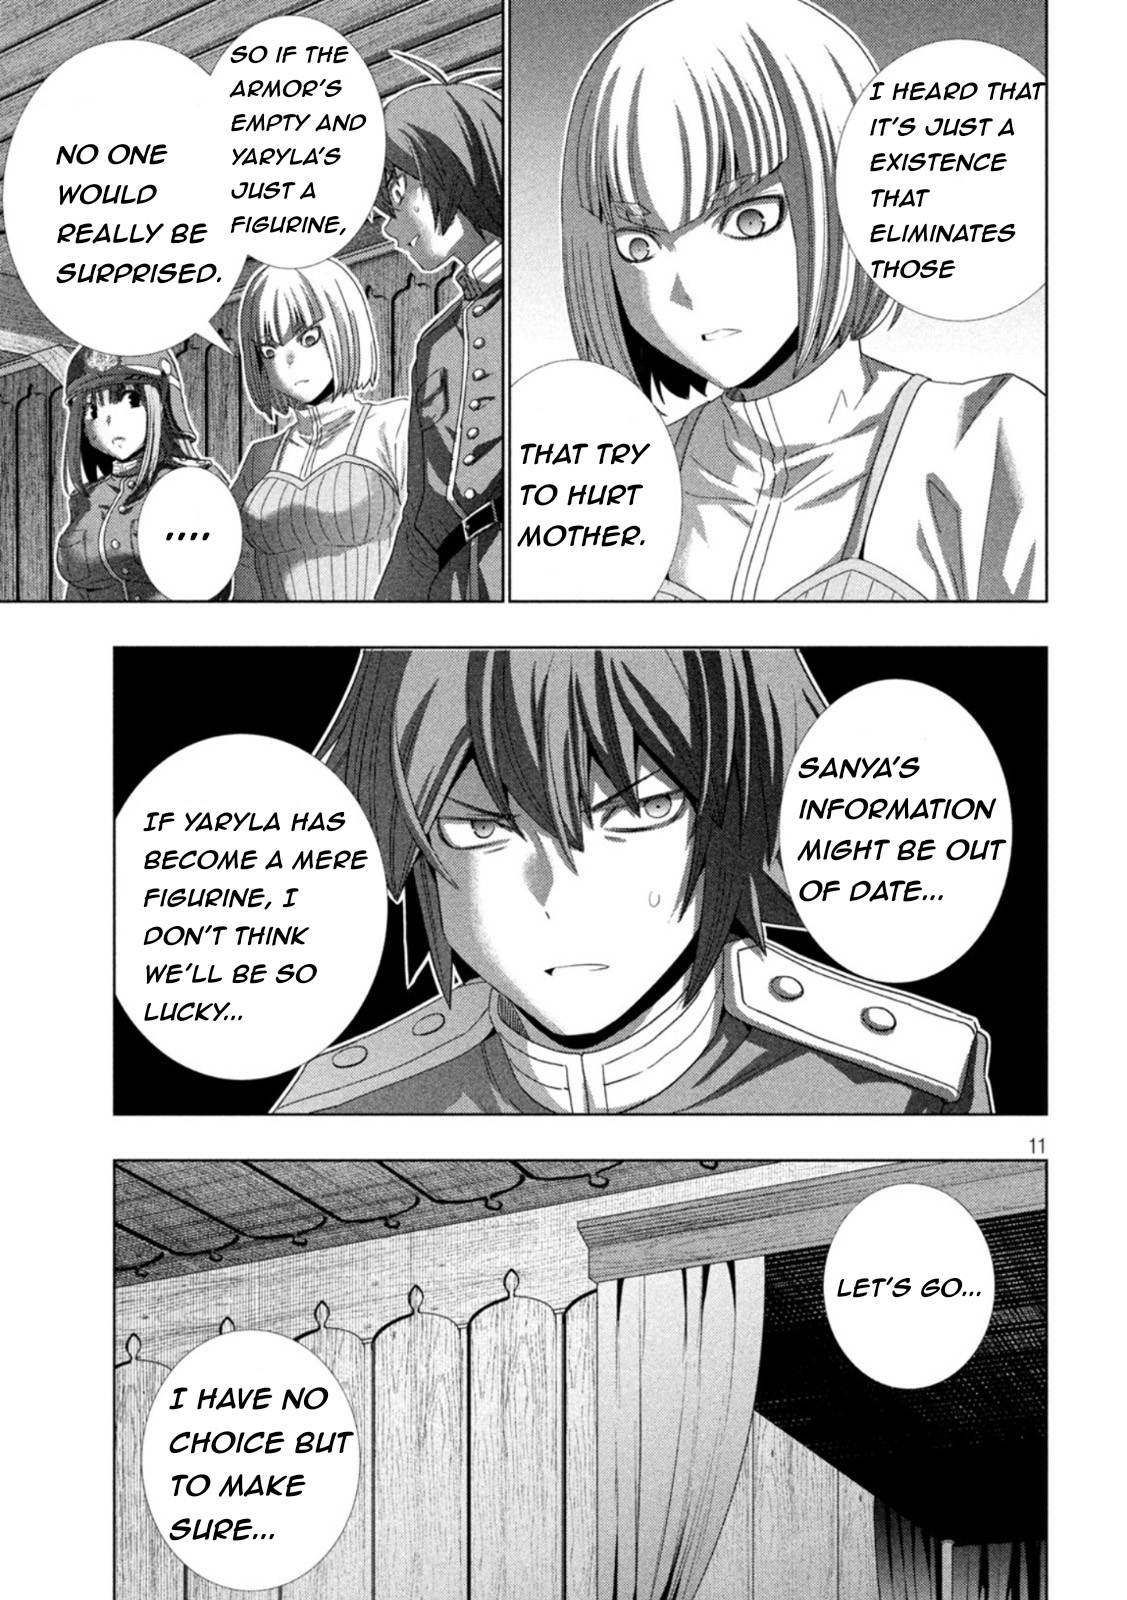 Read Parallel Paradise Chapter 210: Despair on Mangakakalot